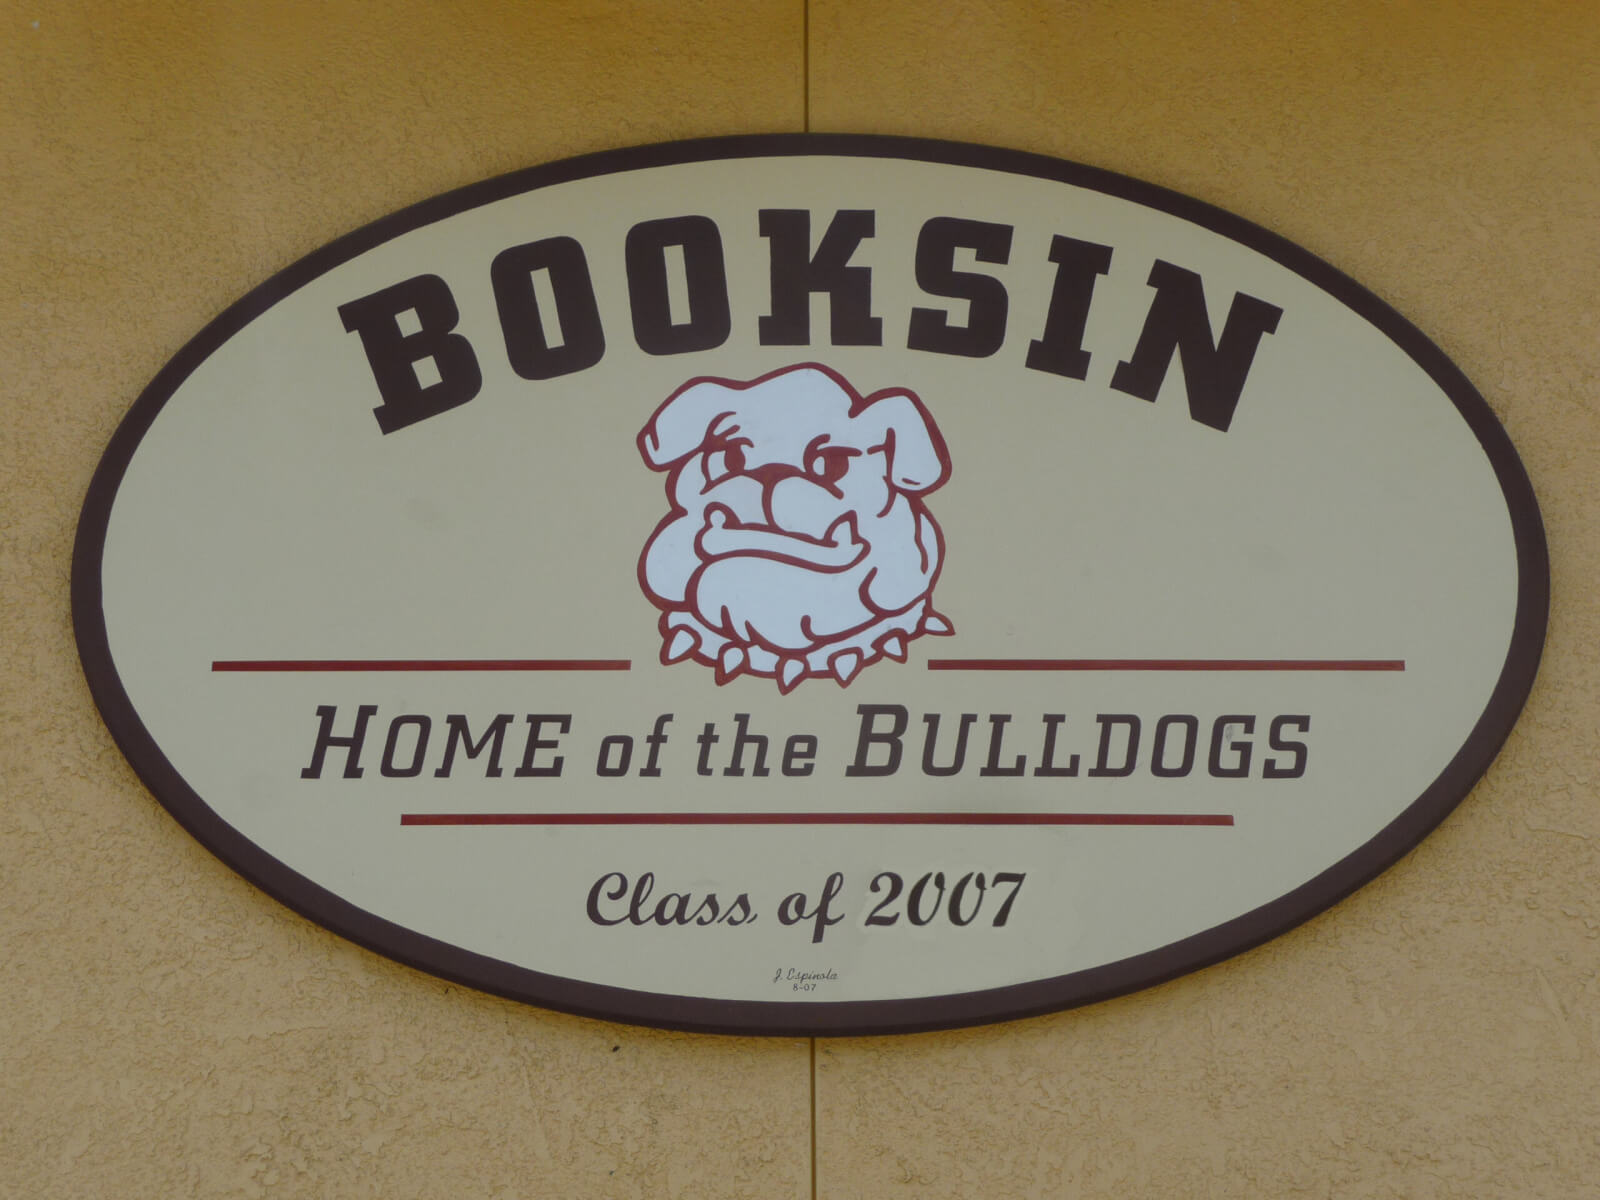 San Jose school signs award booksin custom